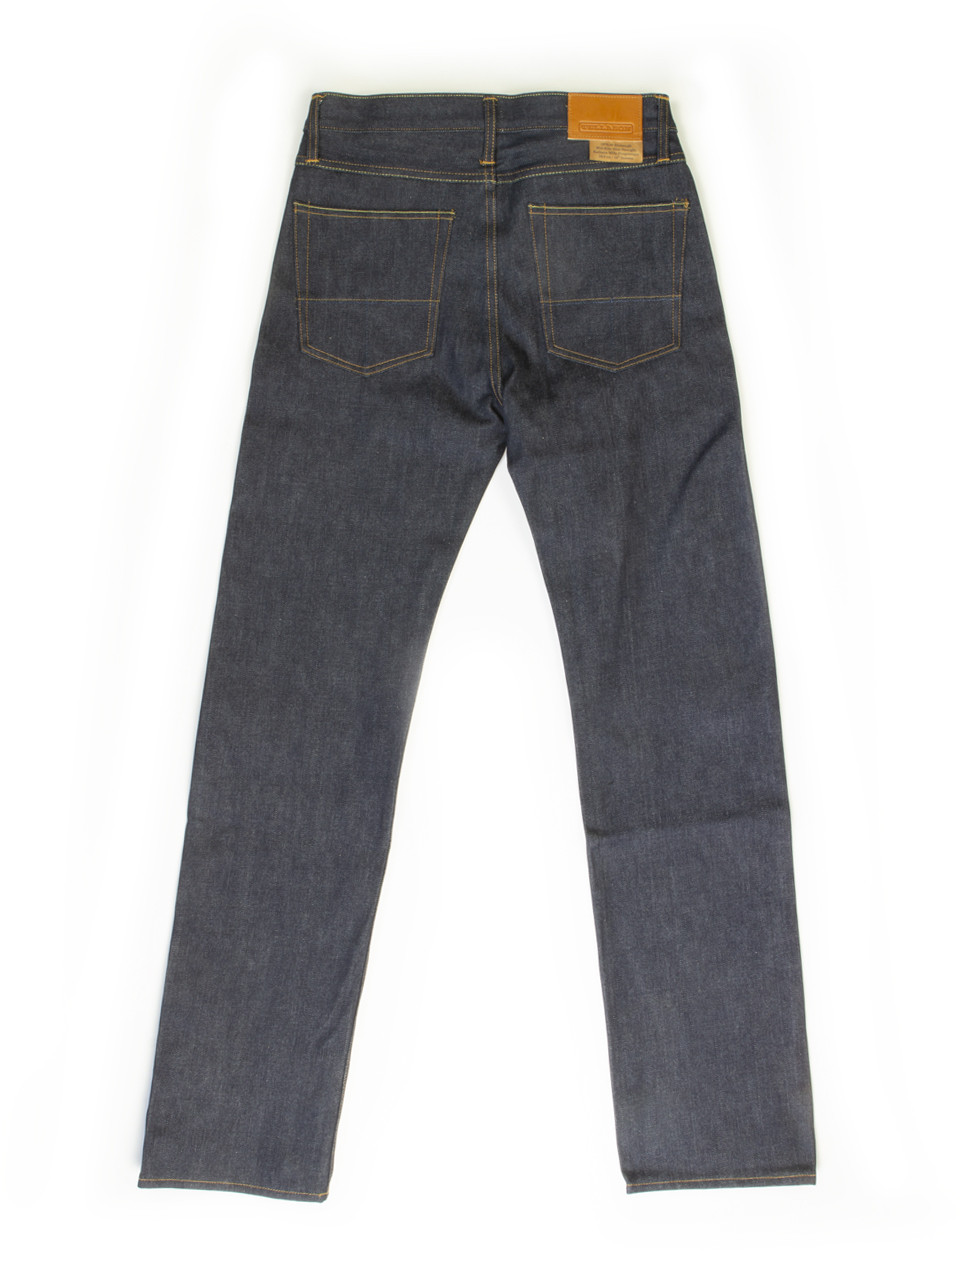 THE BLUBAUGH Mid Rise Slim Straight Selvedge Jeans